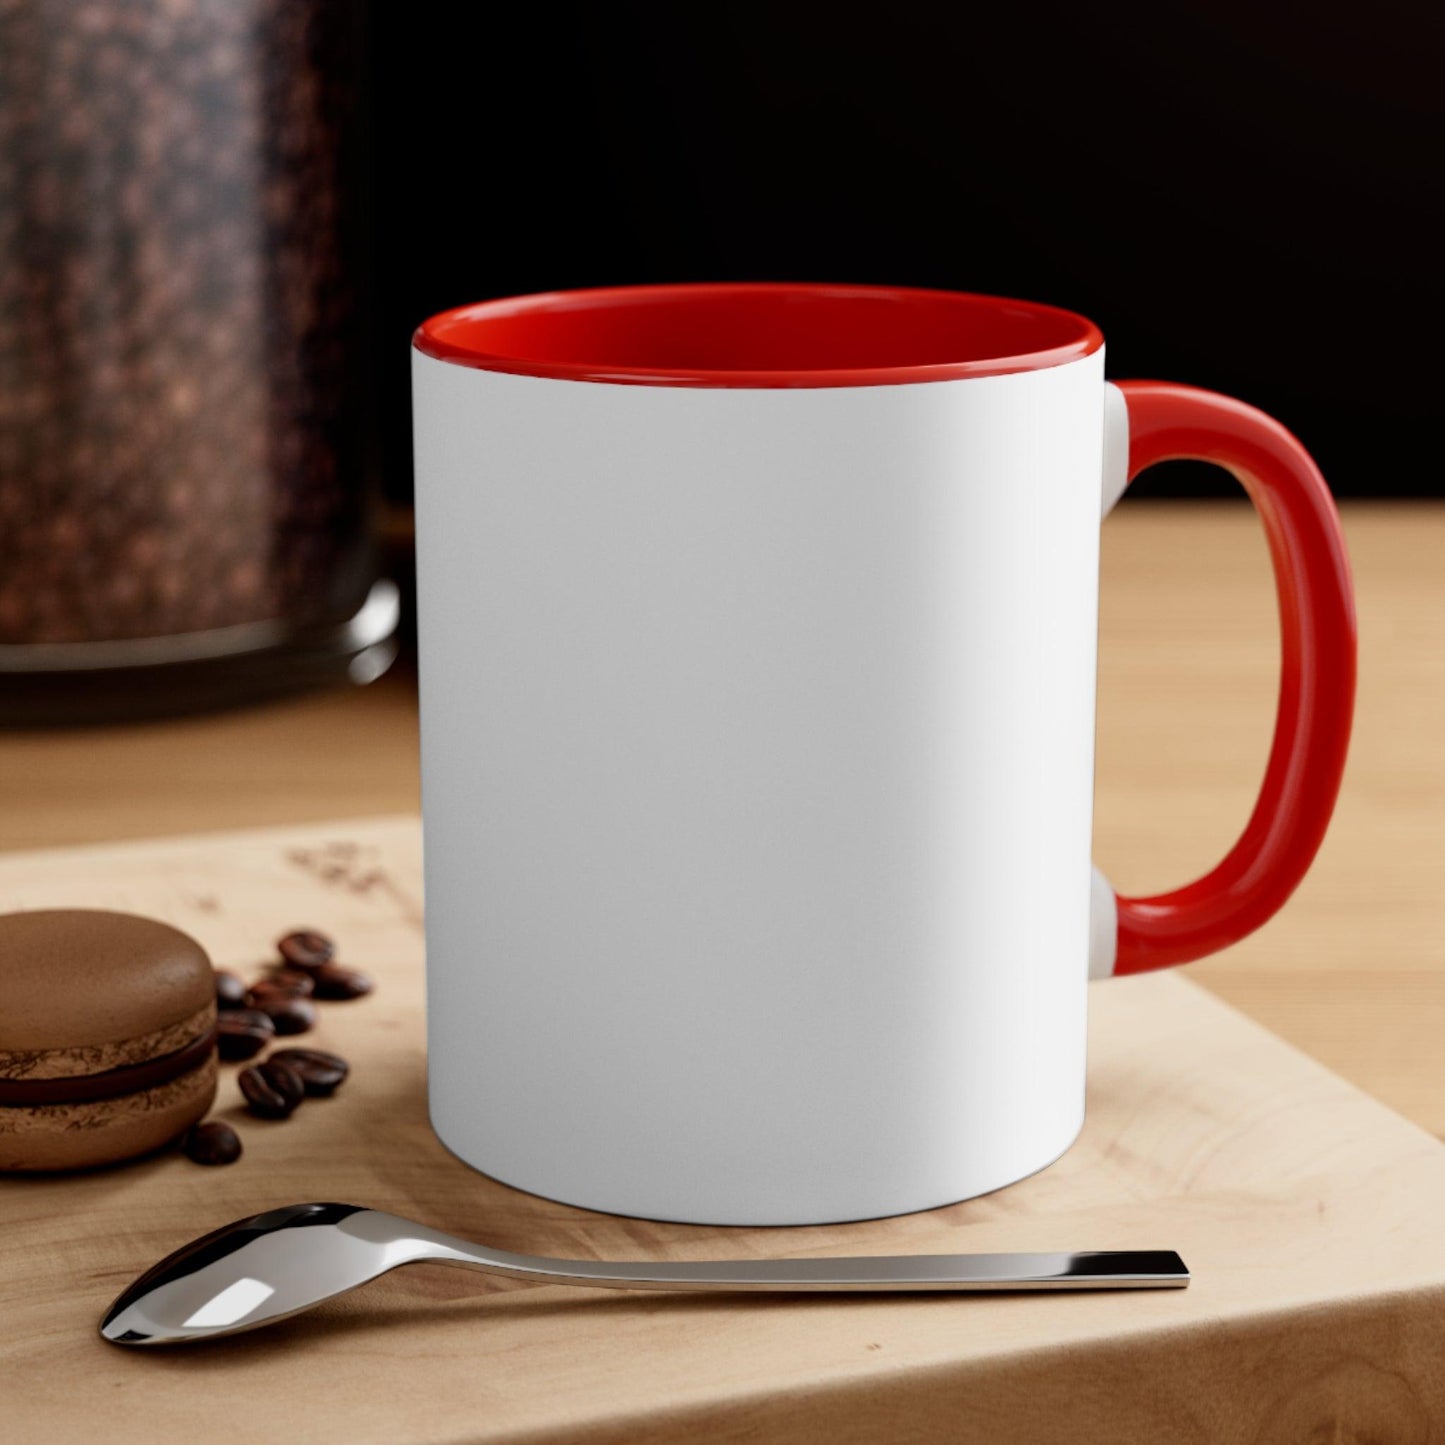 7savings Accent Coffee Mug, 11oz - Giftsmojo